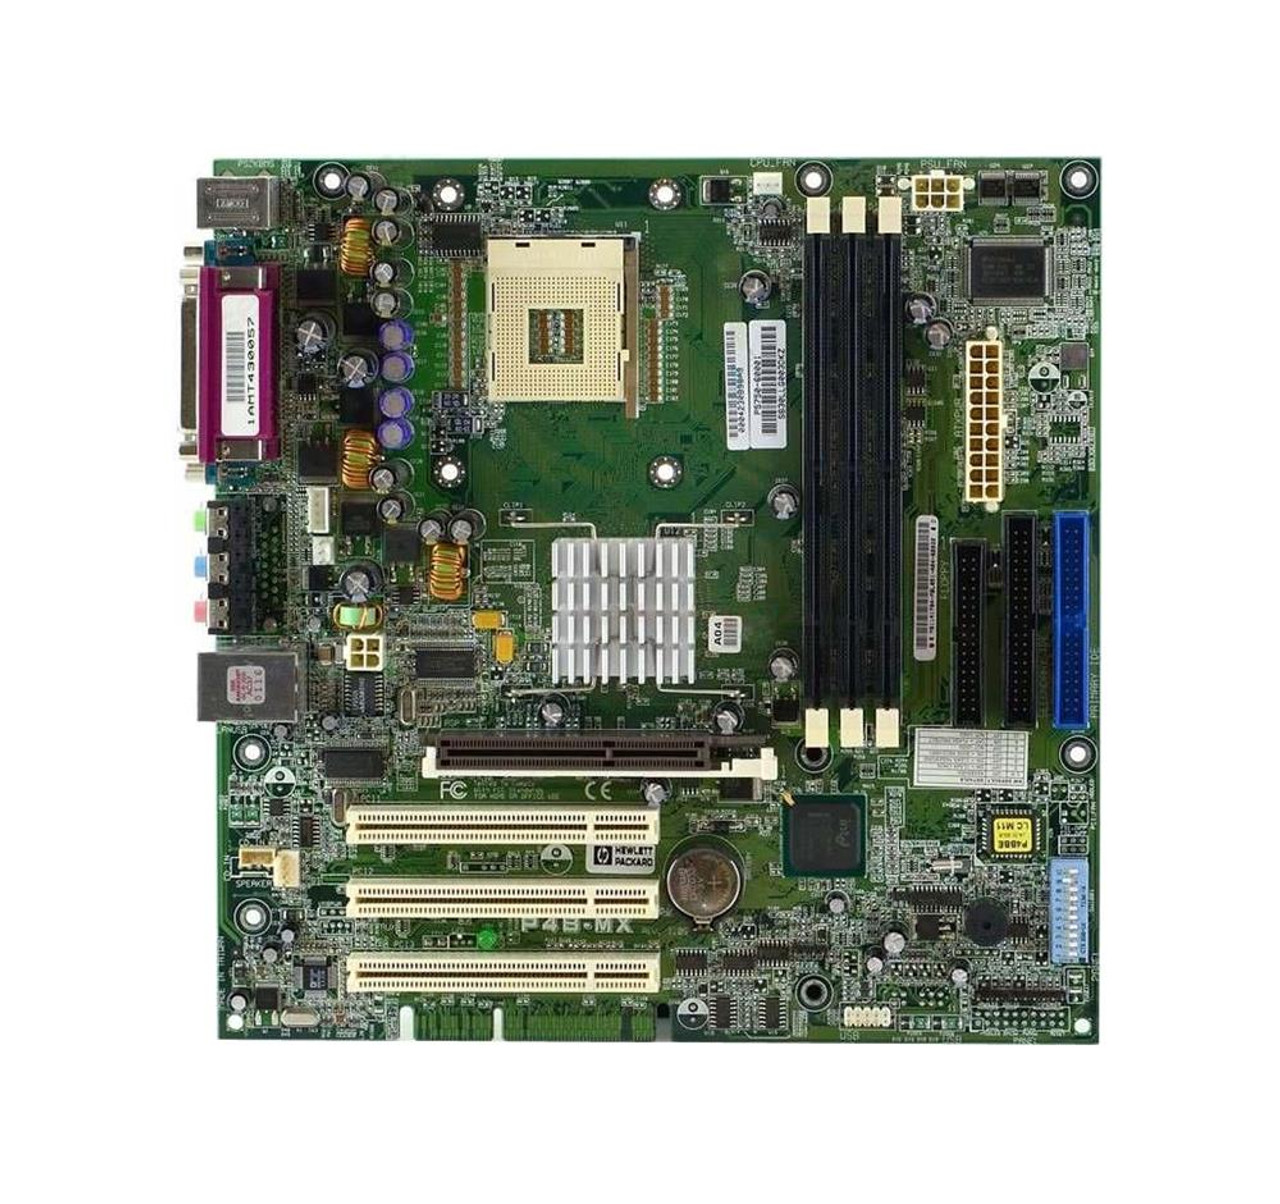 P5750-60001 HP System Board (Motherboard) For Vectra Vl420 Dt (Refurbished)